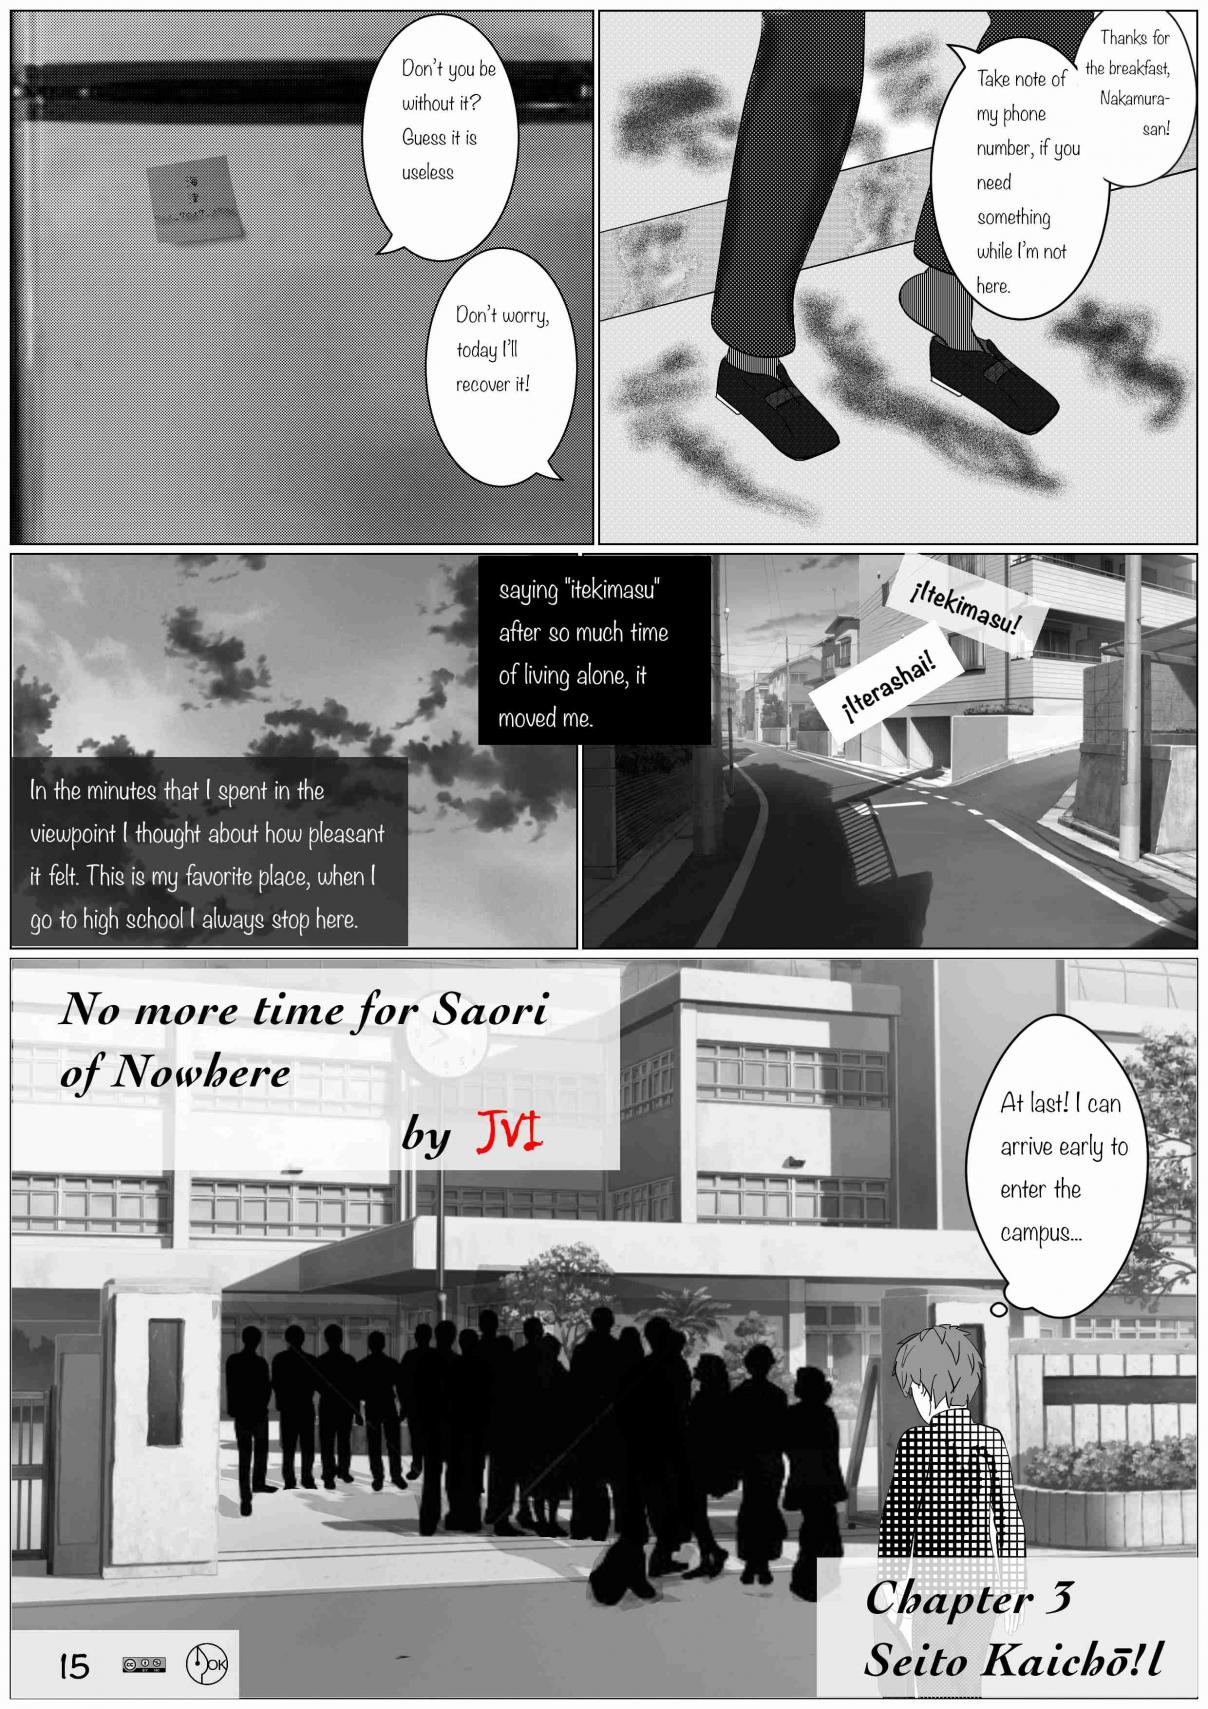 No more time for Saori from Nowhere Vol. 1 Ch. 3 Seito Kaichō!